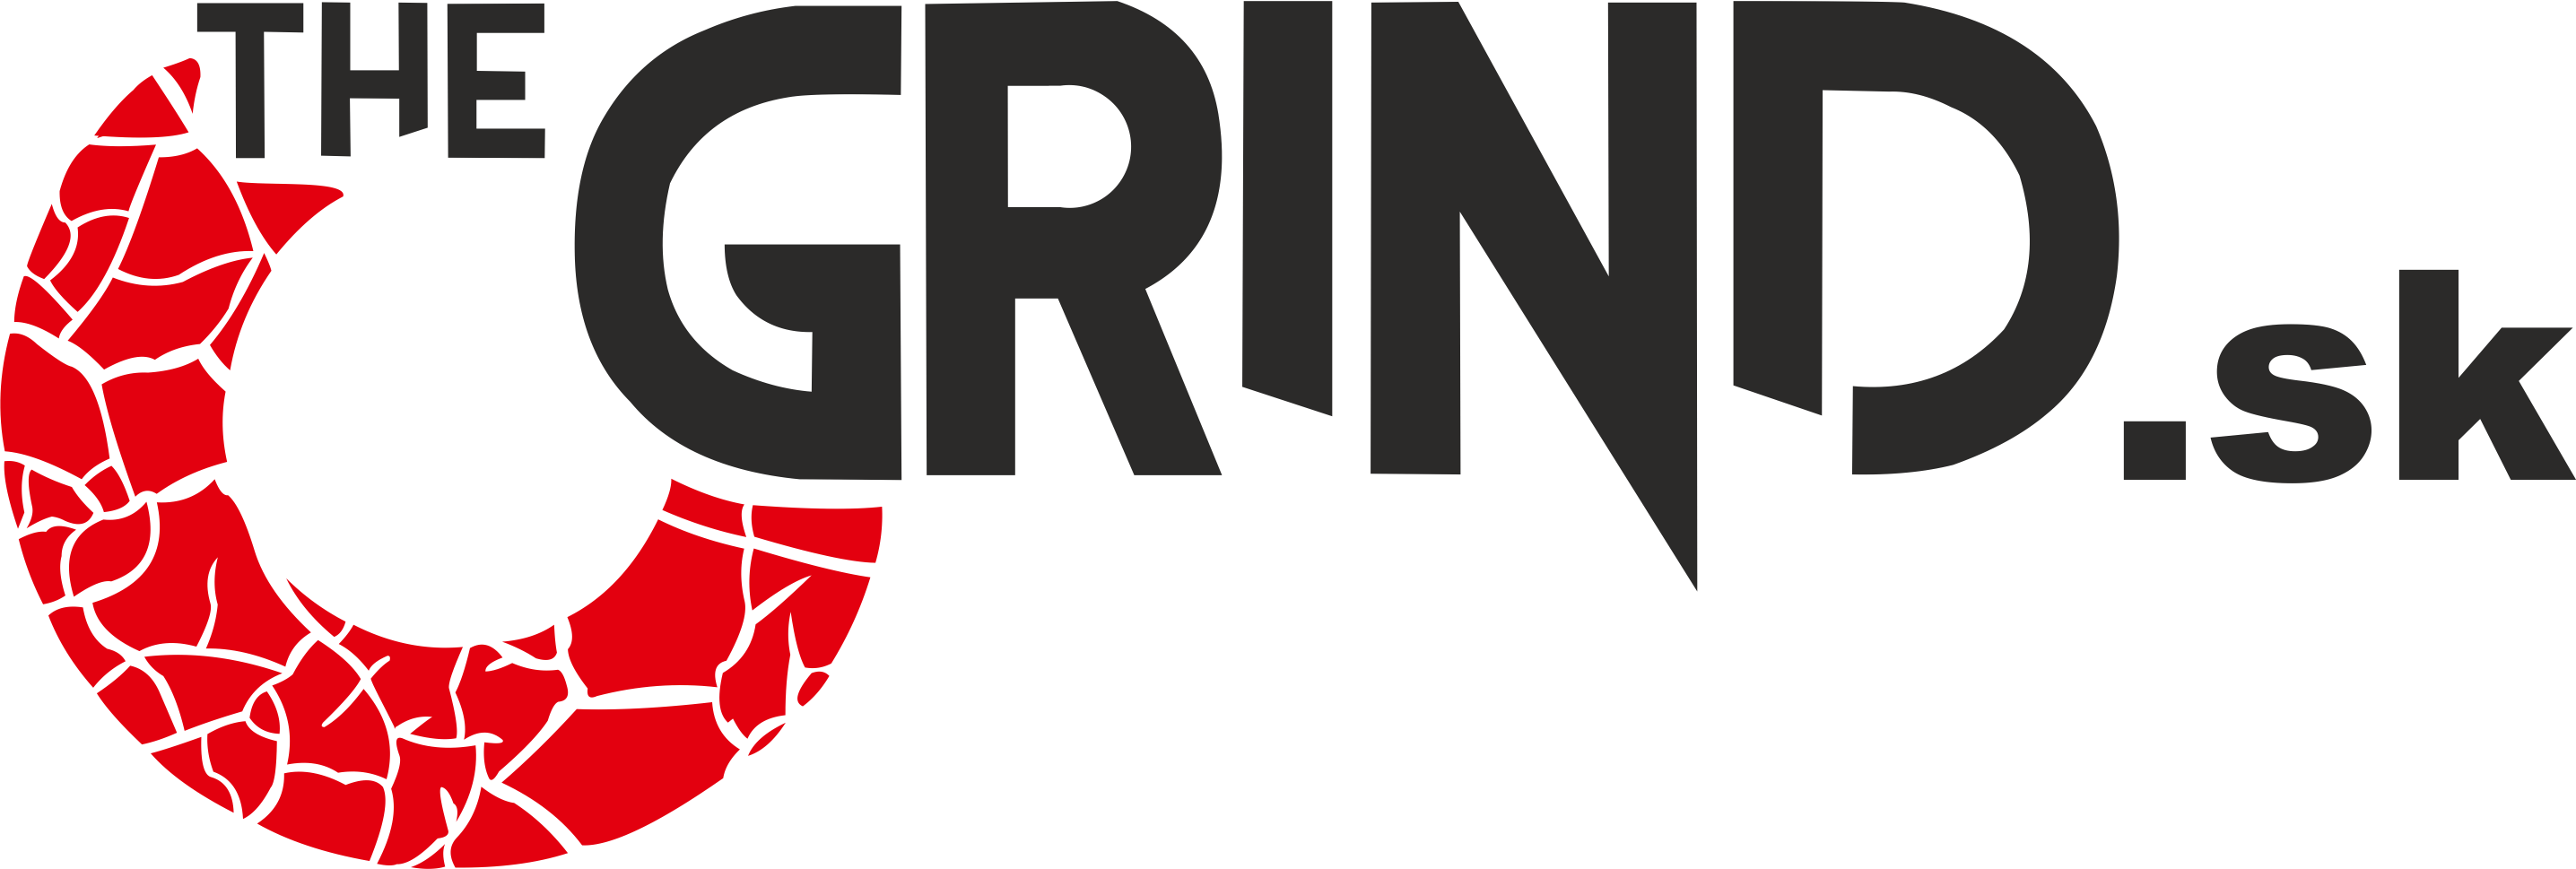 Thegrind.sk logo